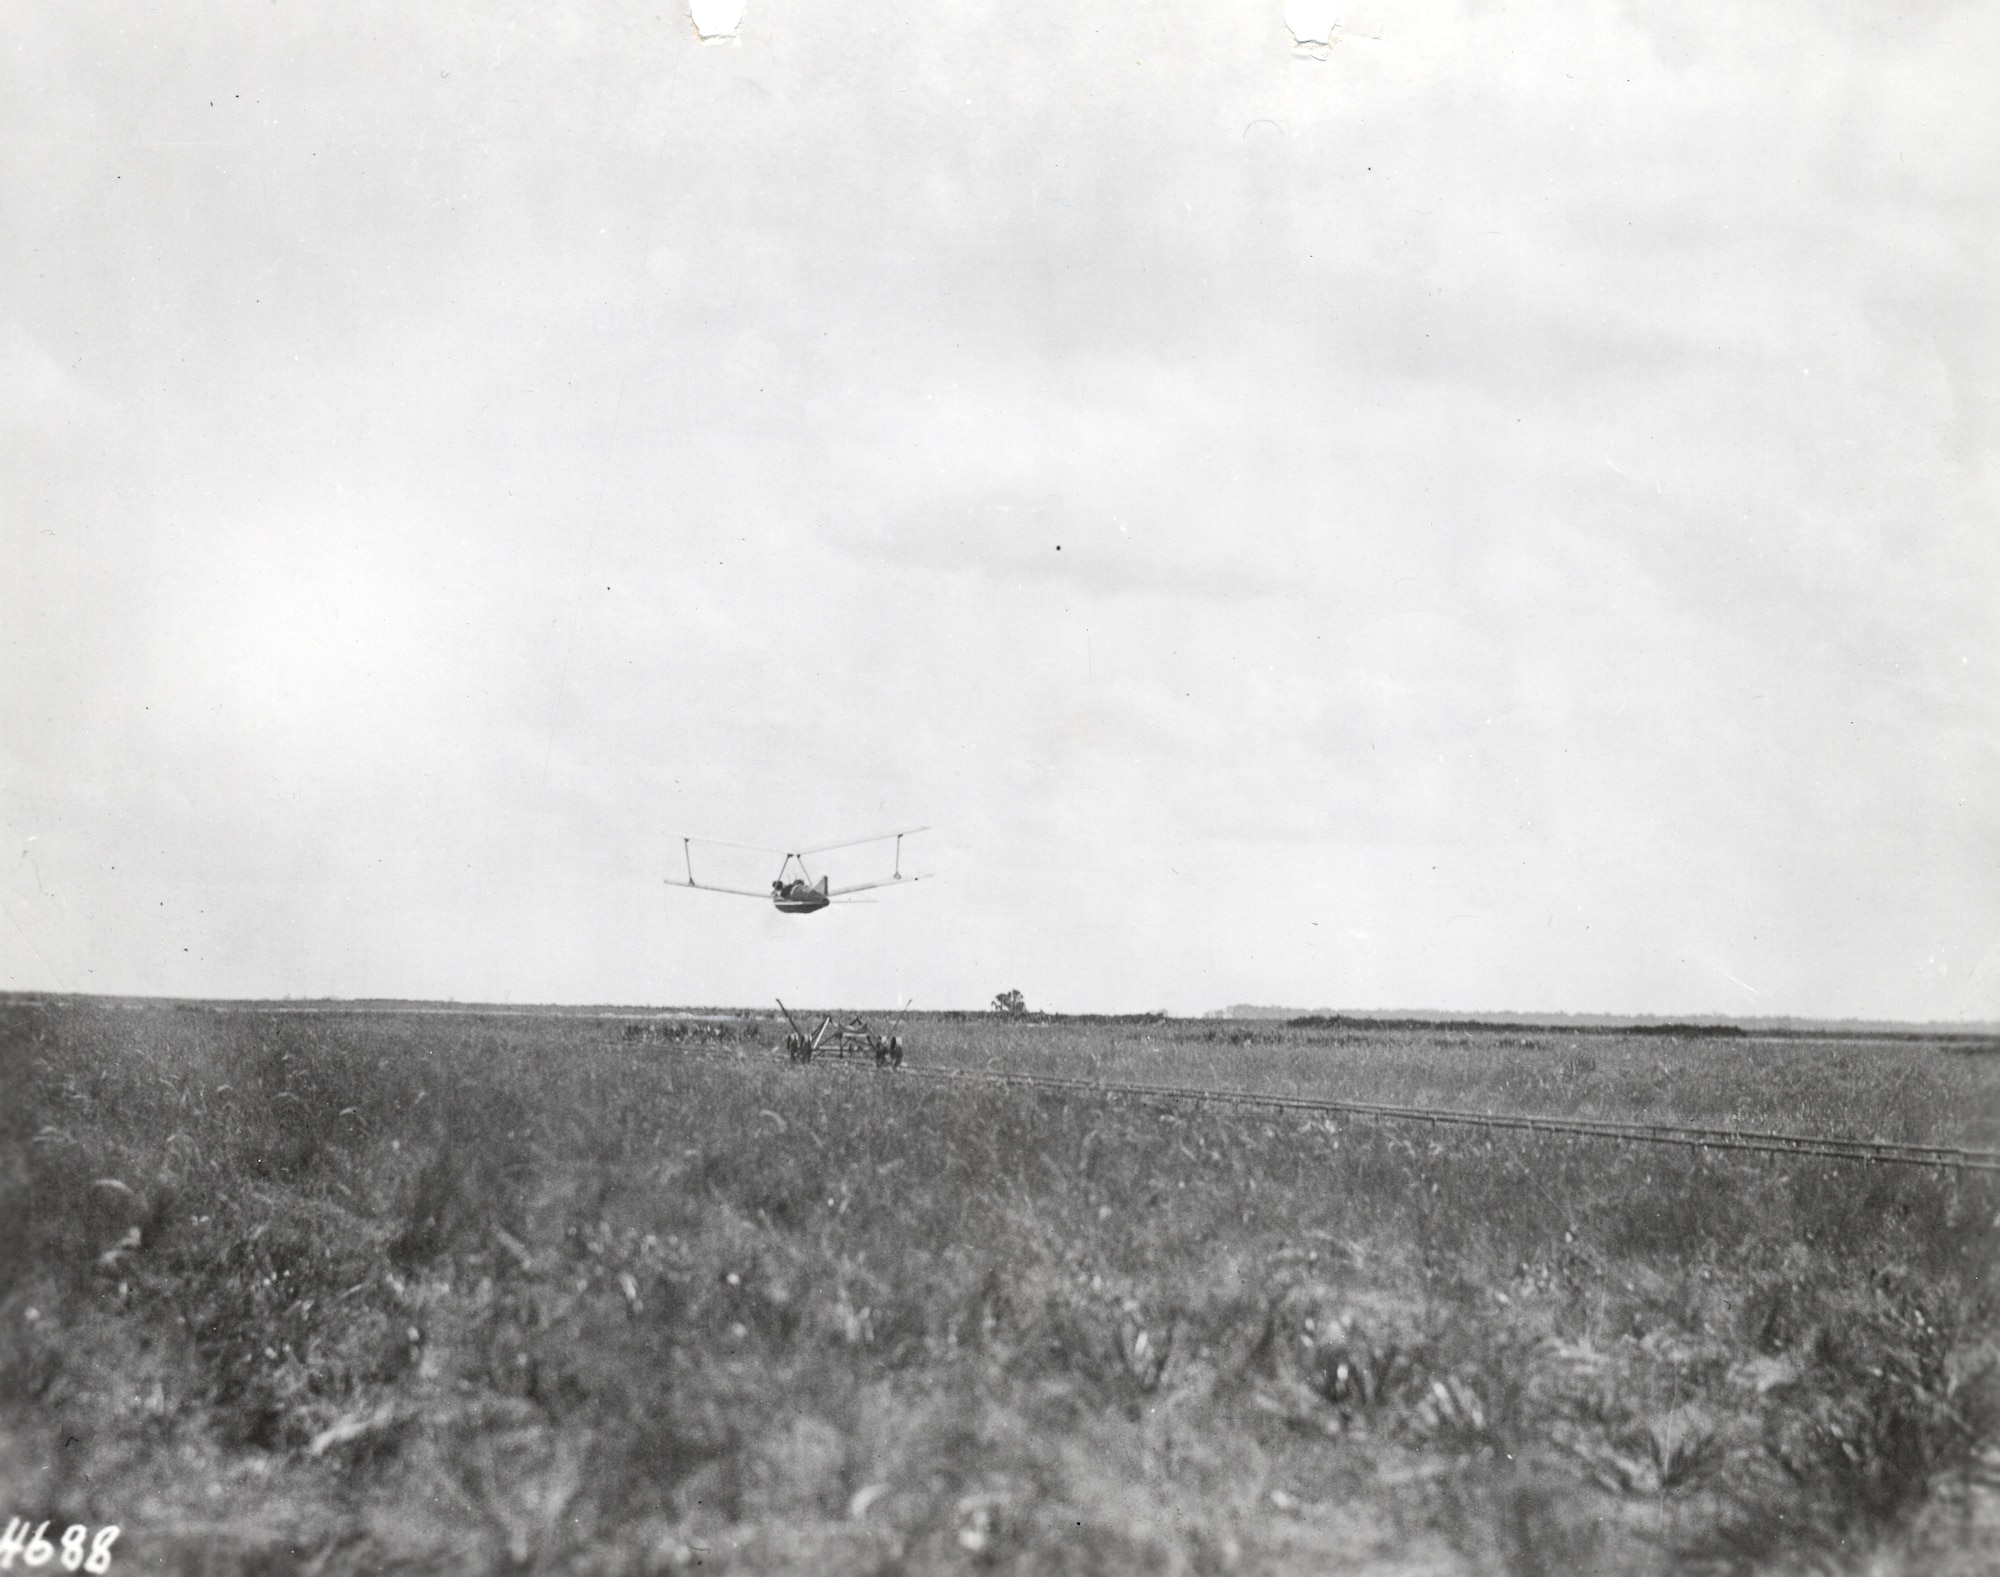 Historic Kettering Aerial Torpedo “Bug” image.